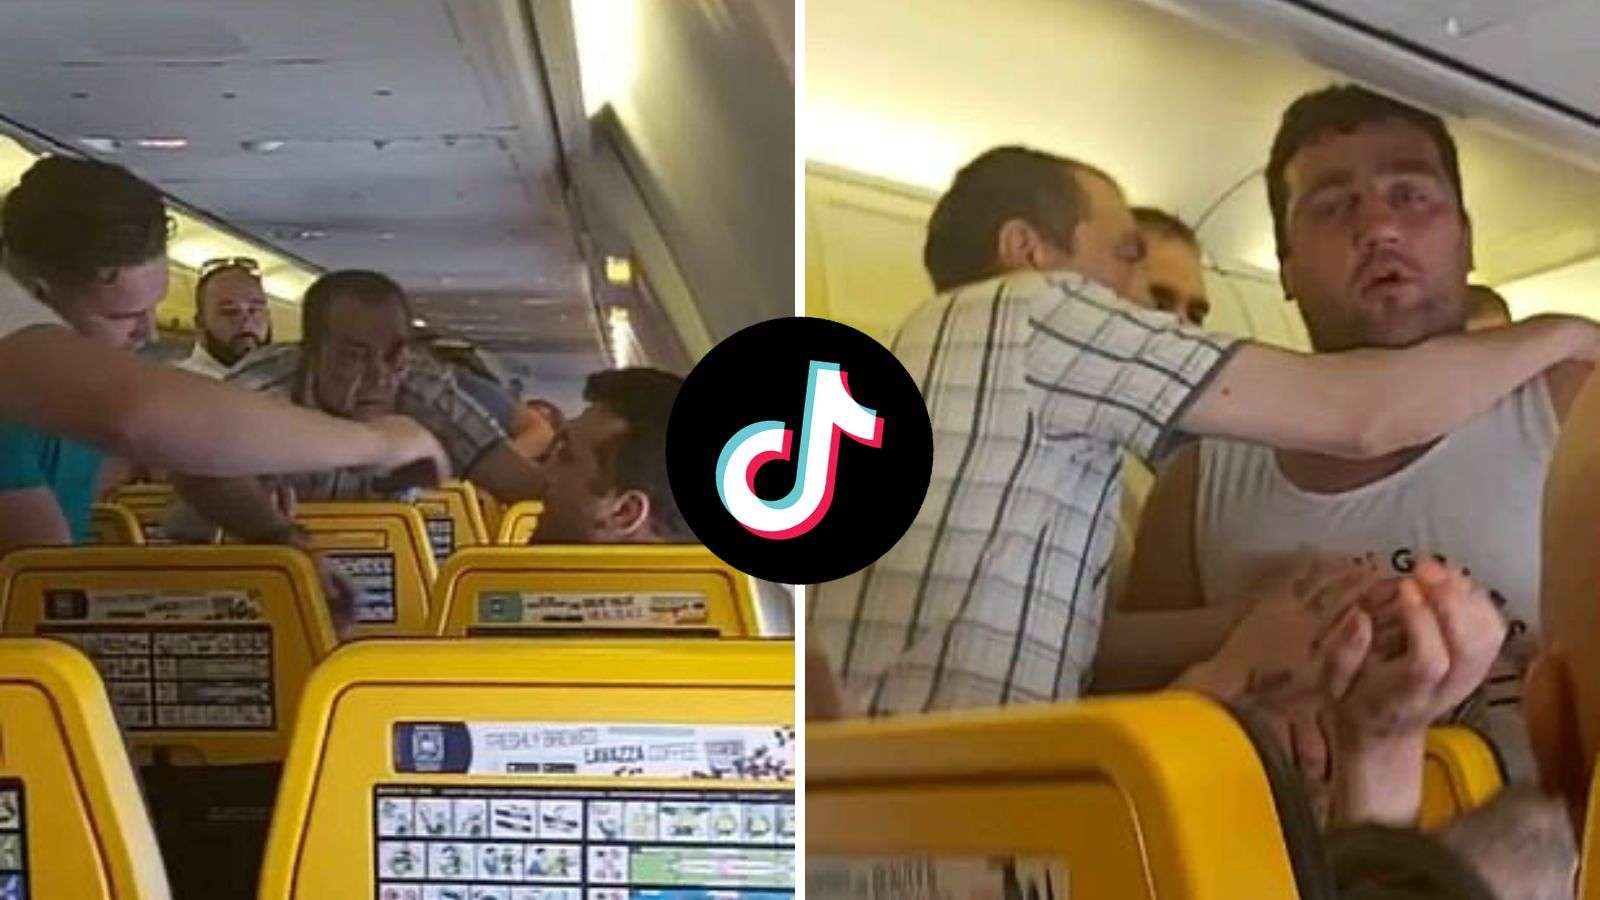 Plane passengers restrain drunk man